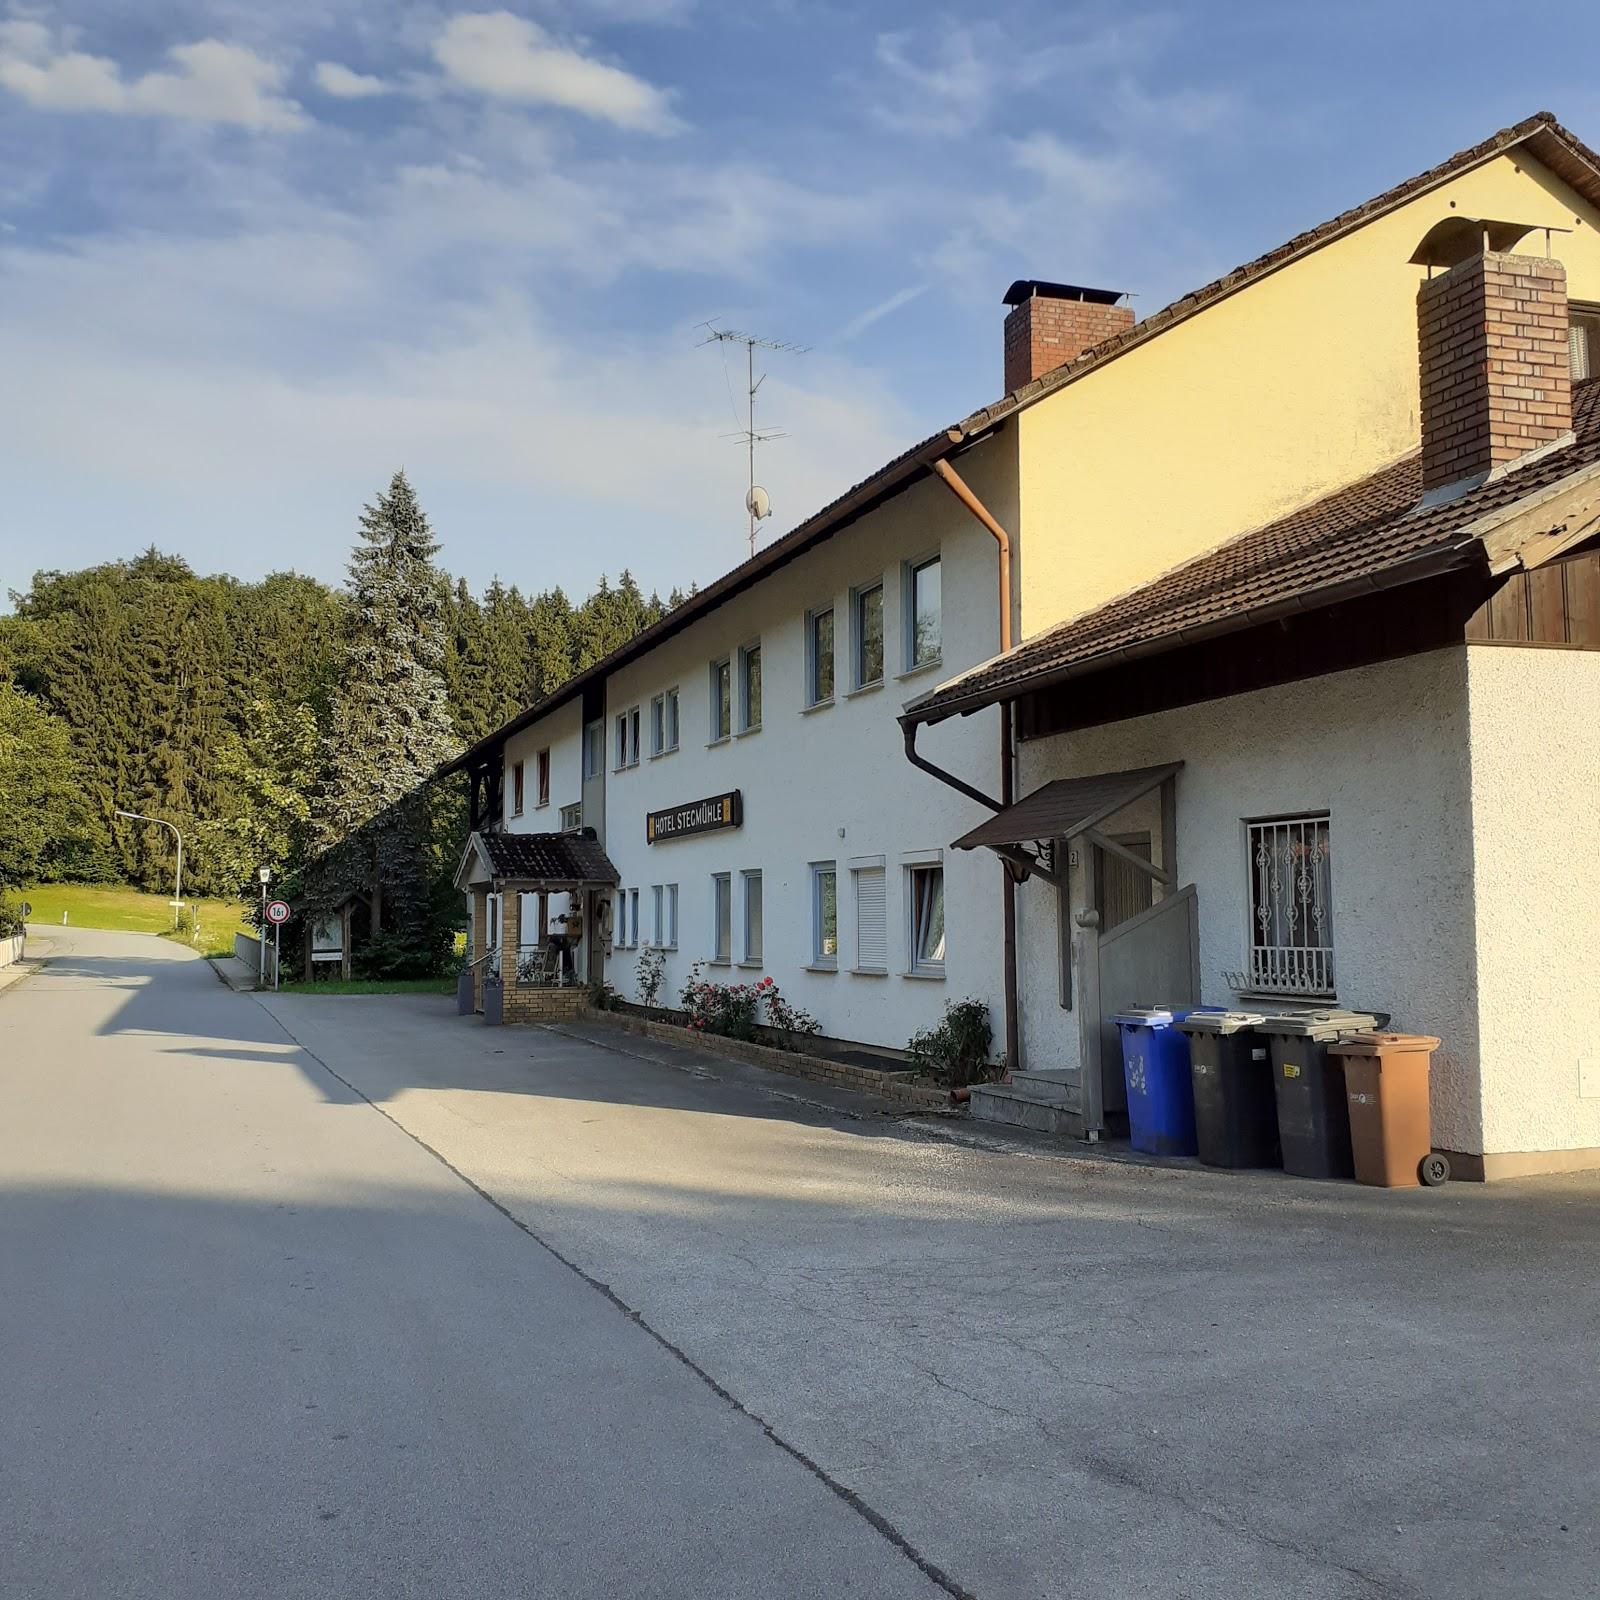 Restaurant "Hotel Stegmühle" in  Iggensbach